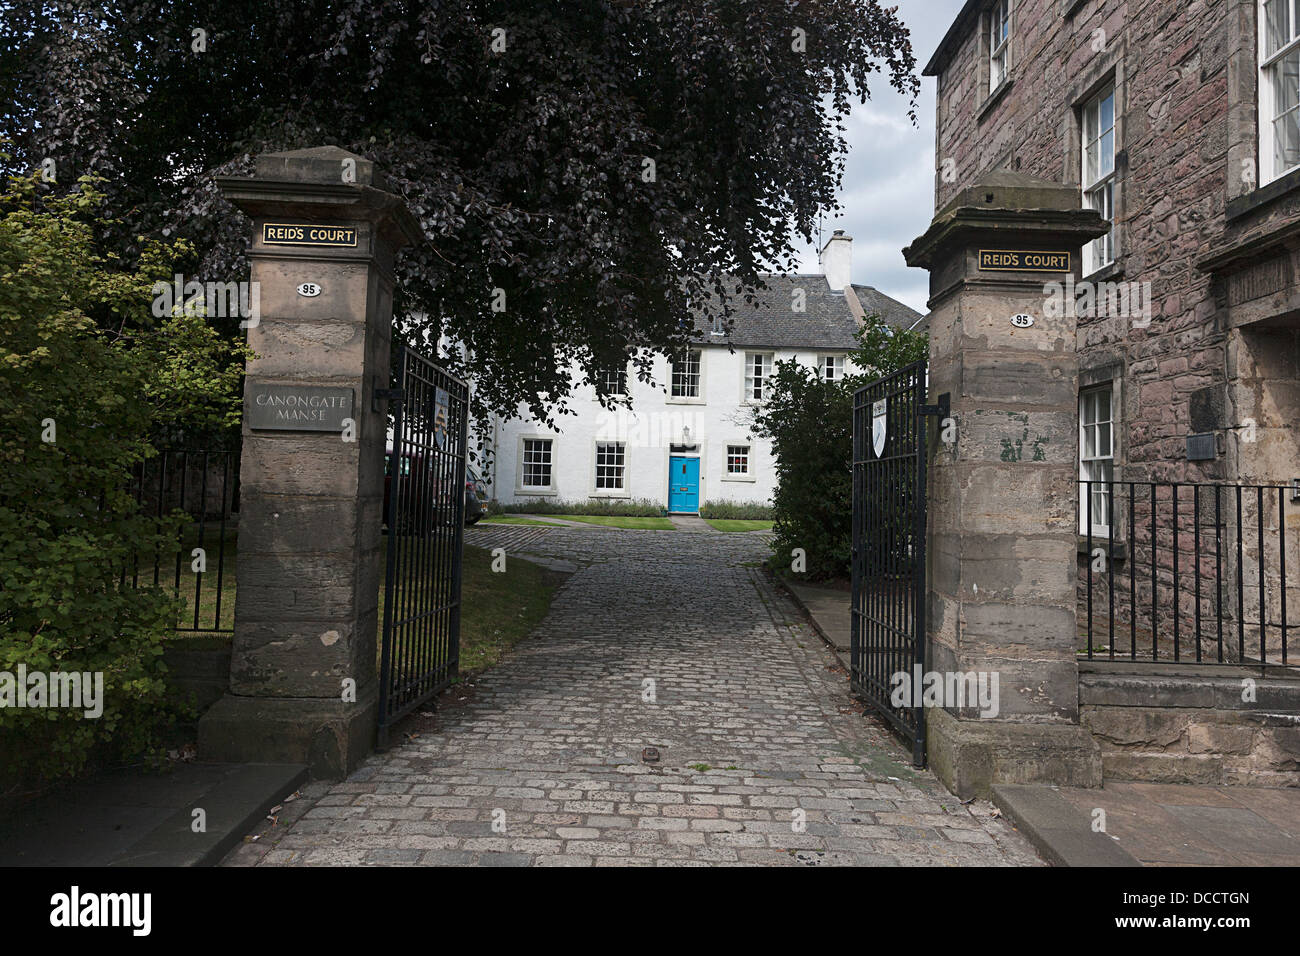 Pfarrhaus. Canongate Edinburgh. Gebäude des späten 18. Jahrhunderts. Stockfoto